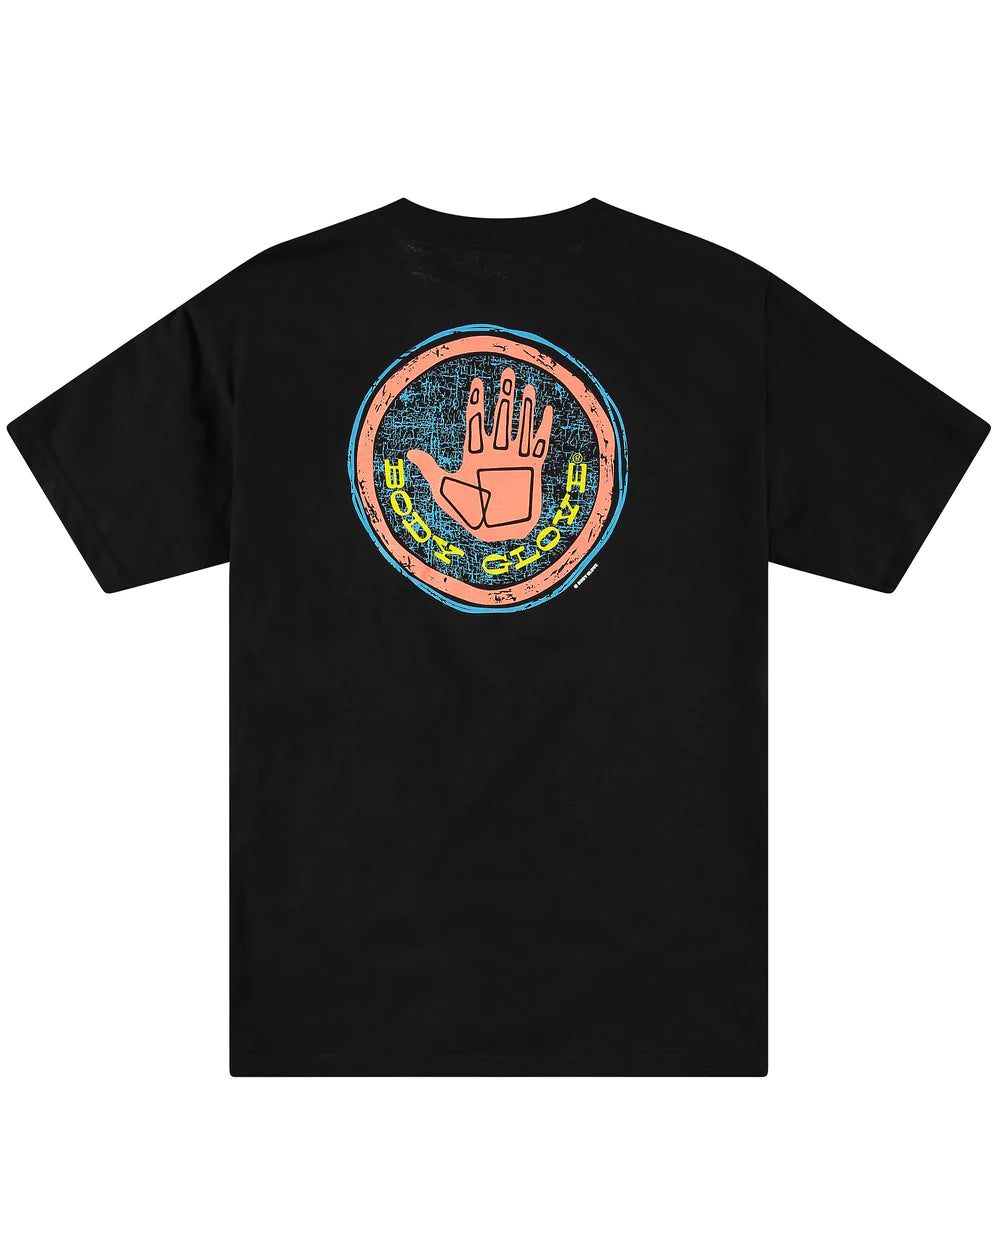 Body Glove Mens T-shirt - 80s Style Hand Print Logo